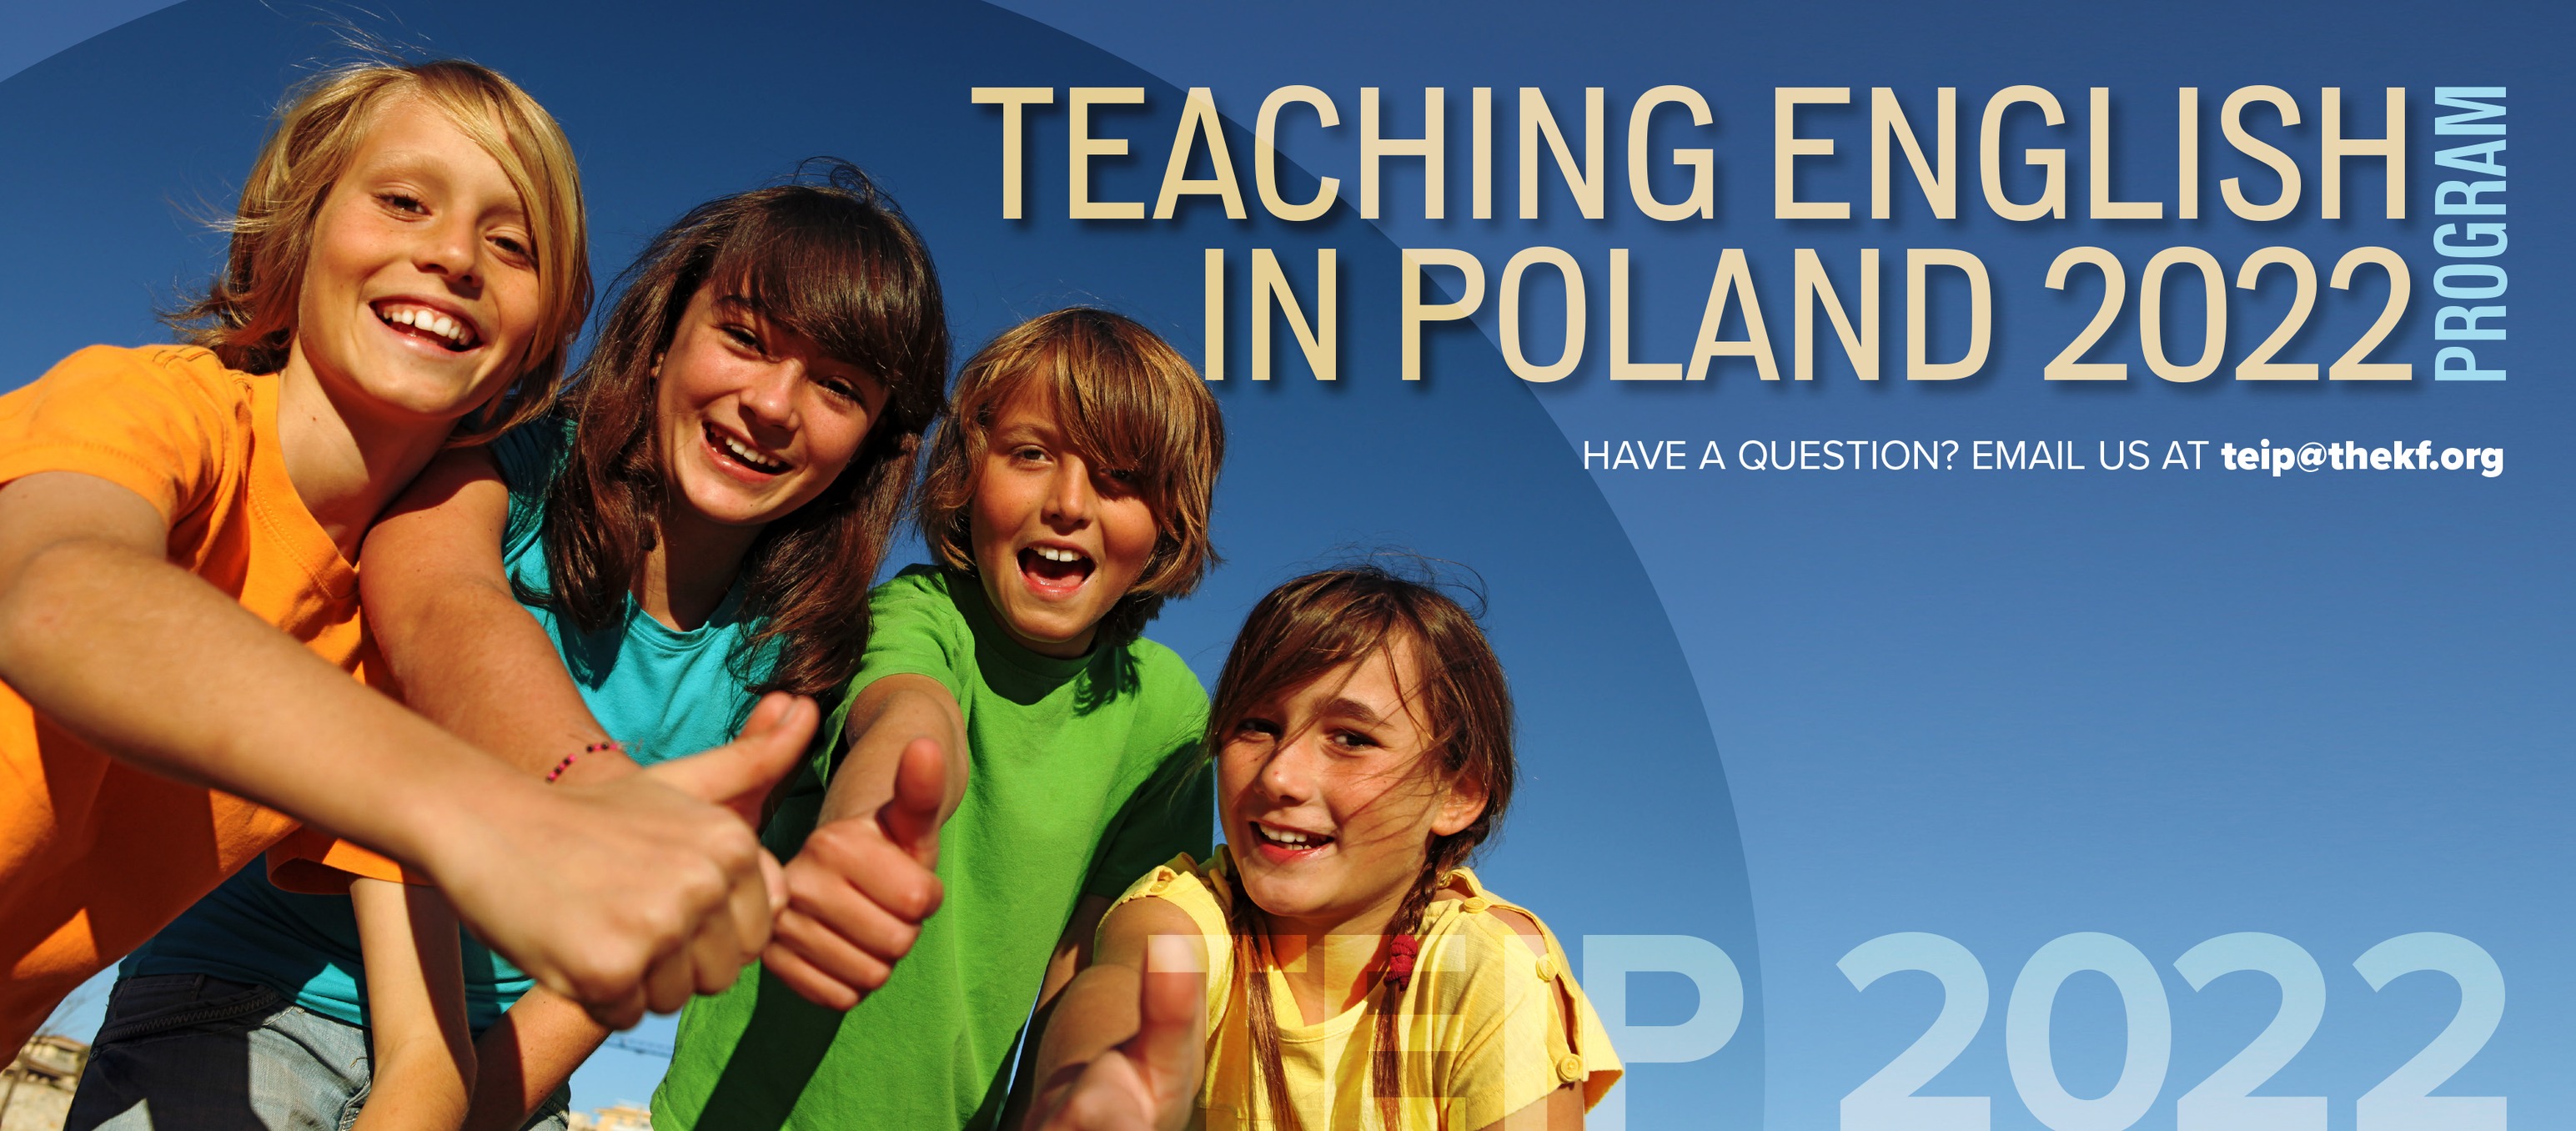 The Kosciuszko Foundation's Teaching English in Poland Program - 2022 Summer Camps